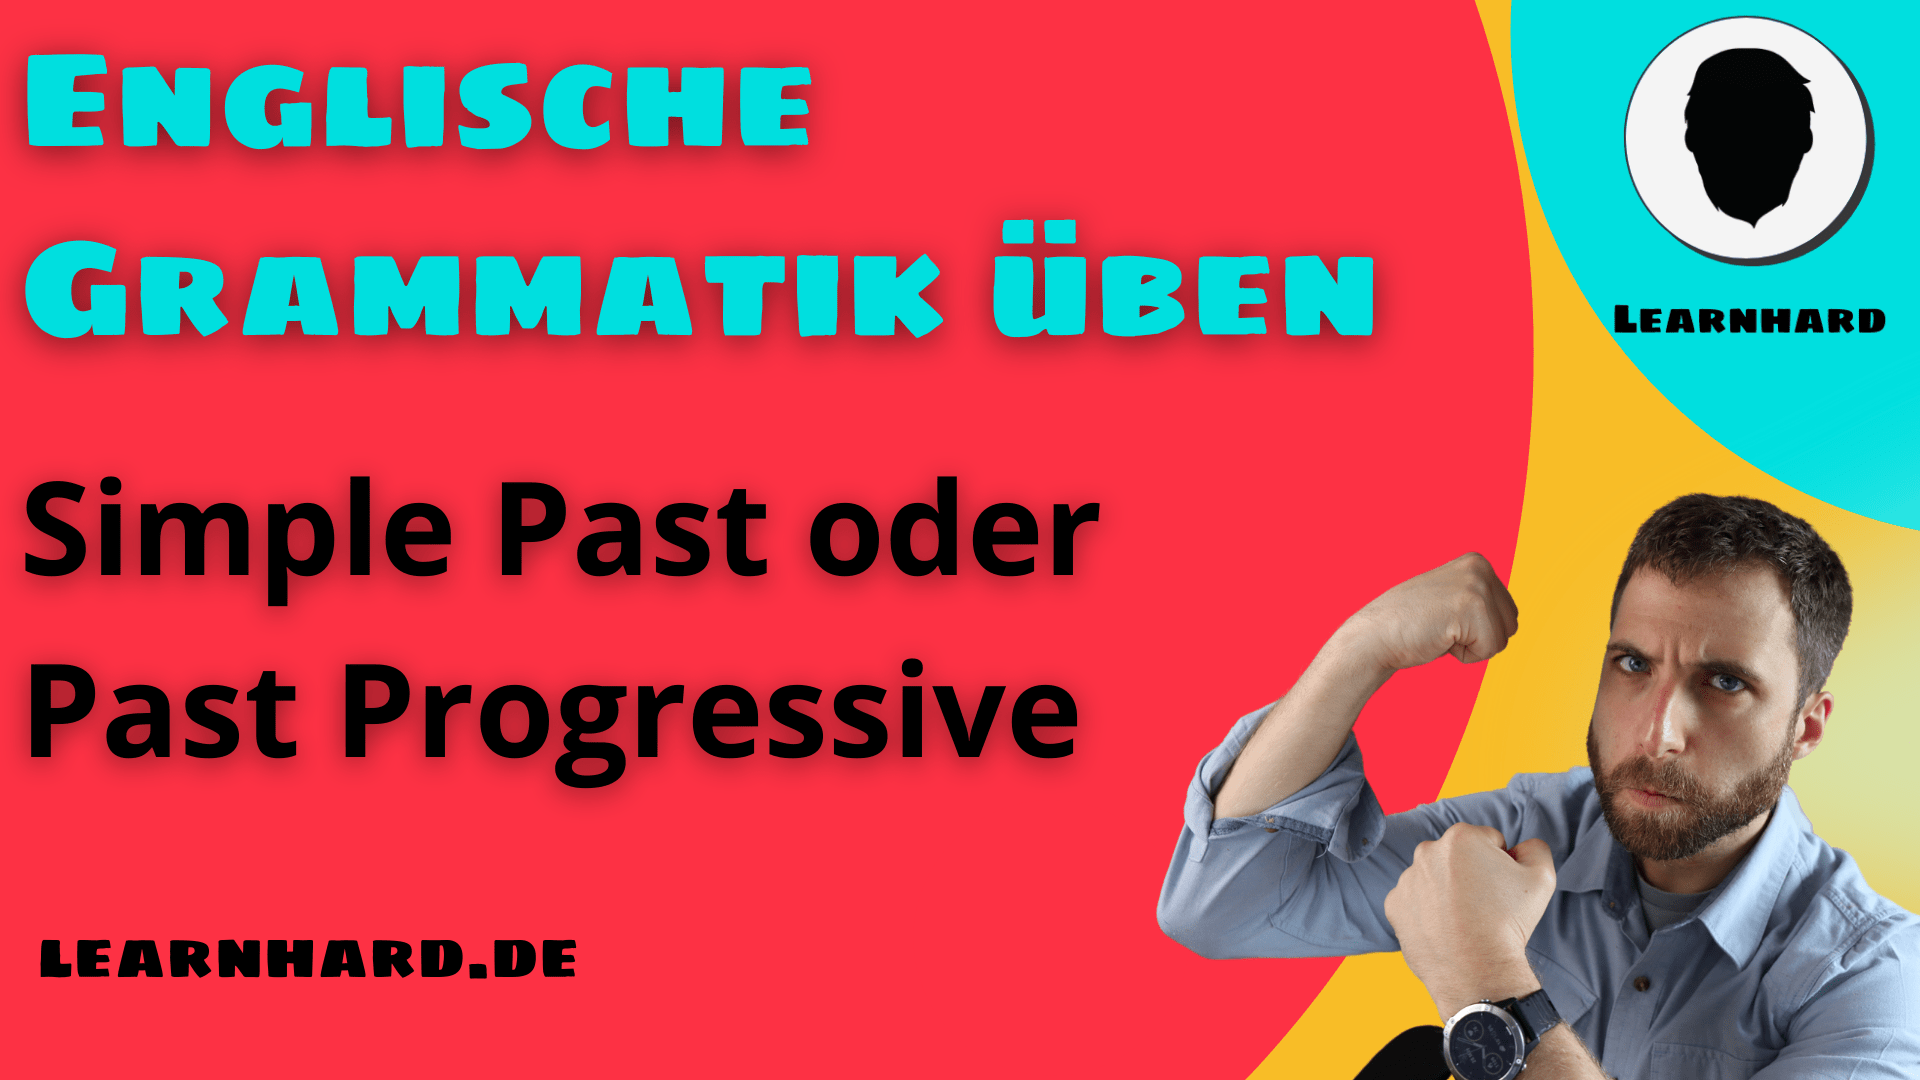 You are currently viewing Englische Grammatik üben: Simple Past oder Past Progressive